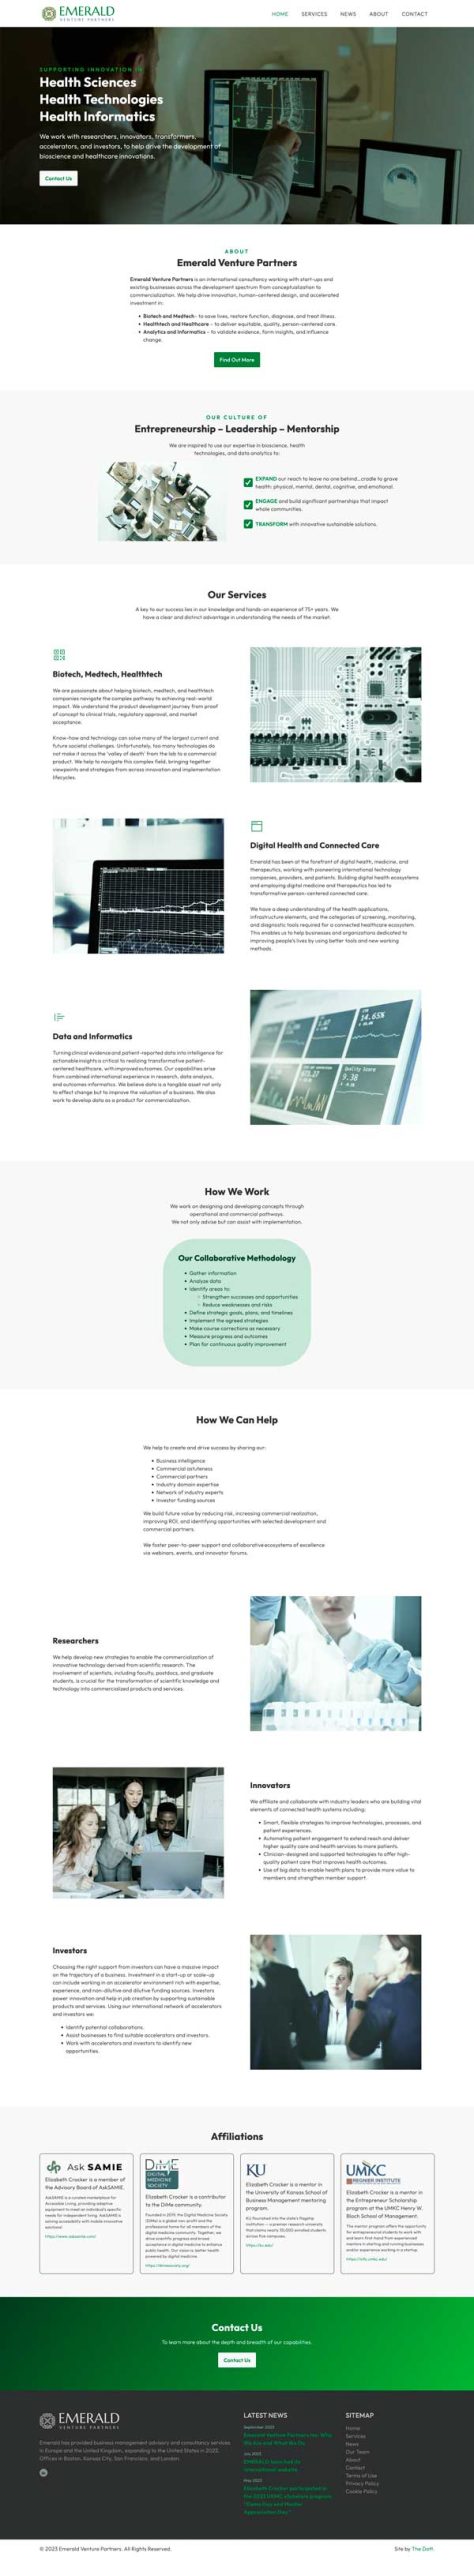 Emerald Venture Partners Website by The Dott.